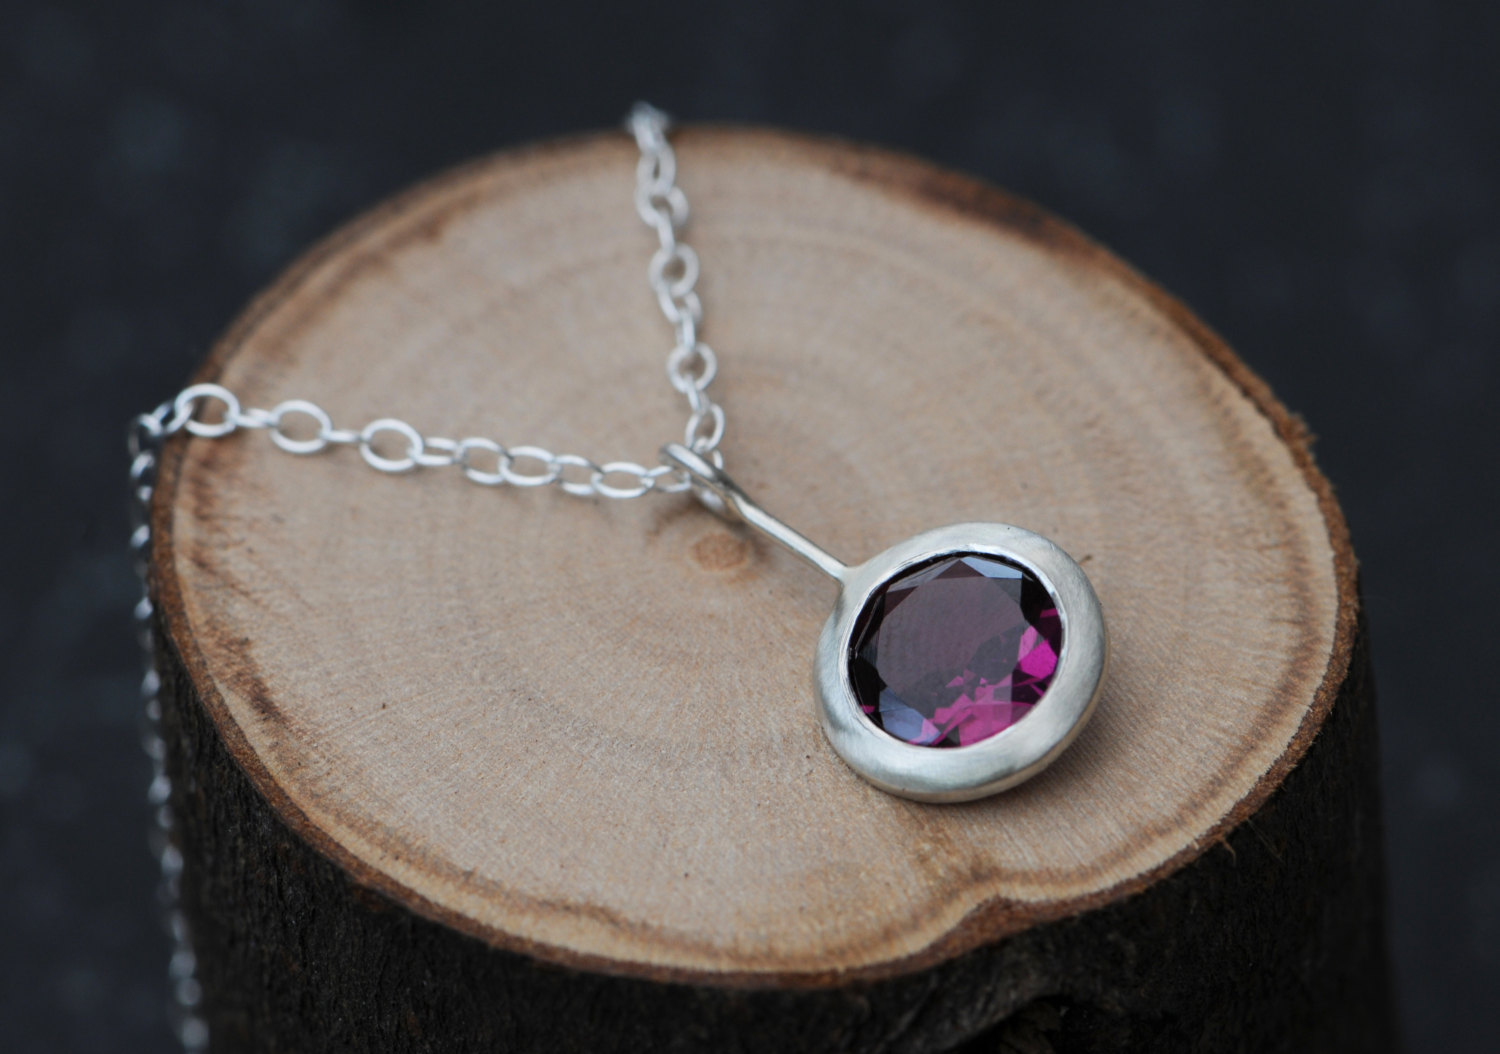 purple Rhodolite garnet 'Lollipop' necklace, set in satin finished sterling silver by William White